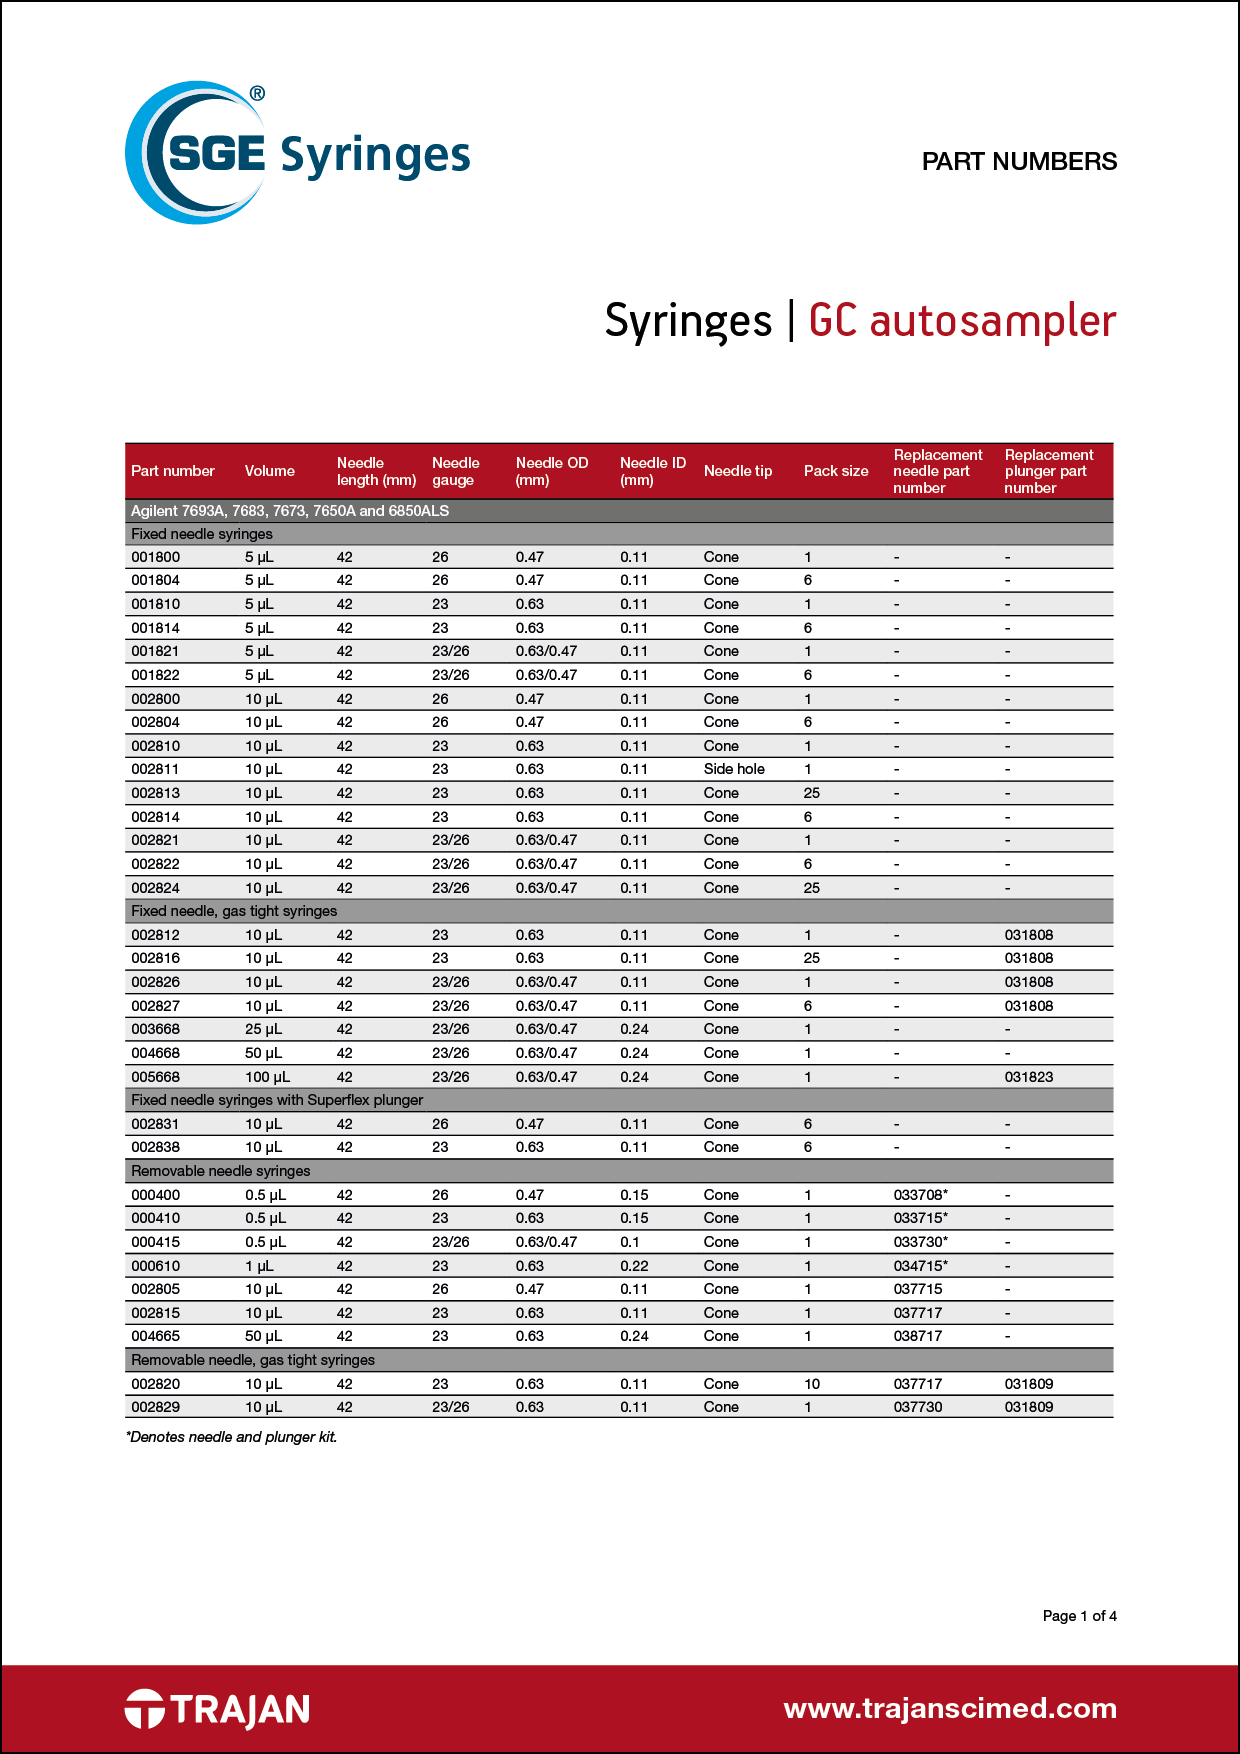 Part Number List - SGE GC autosampler syringes